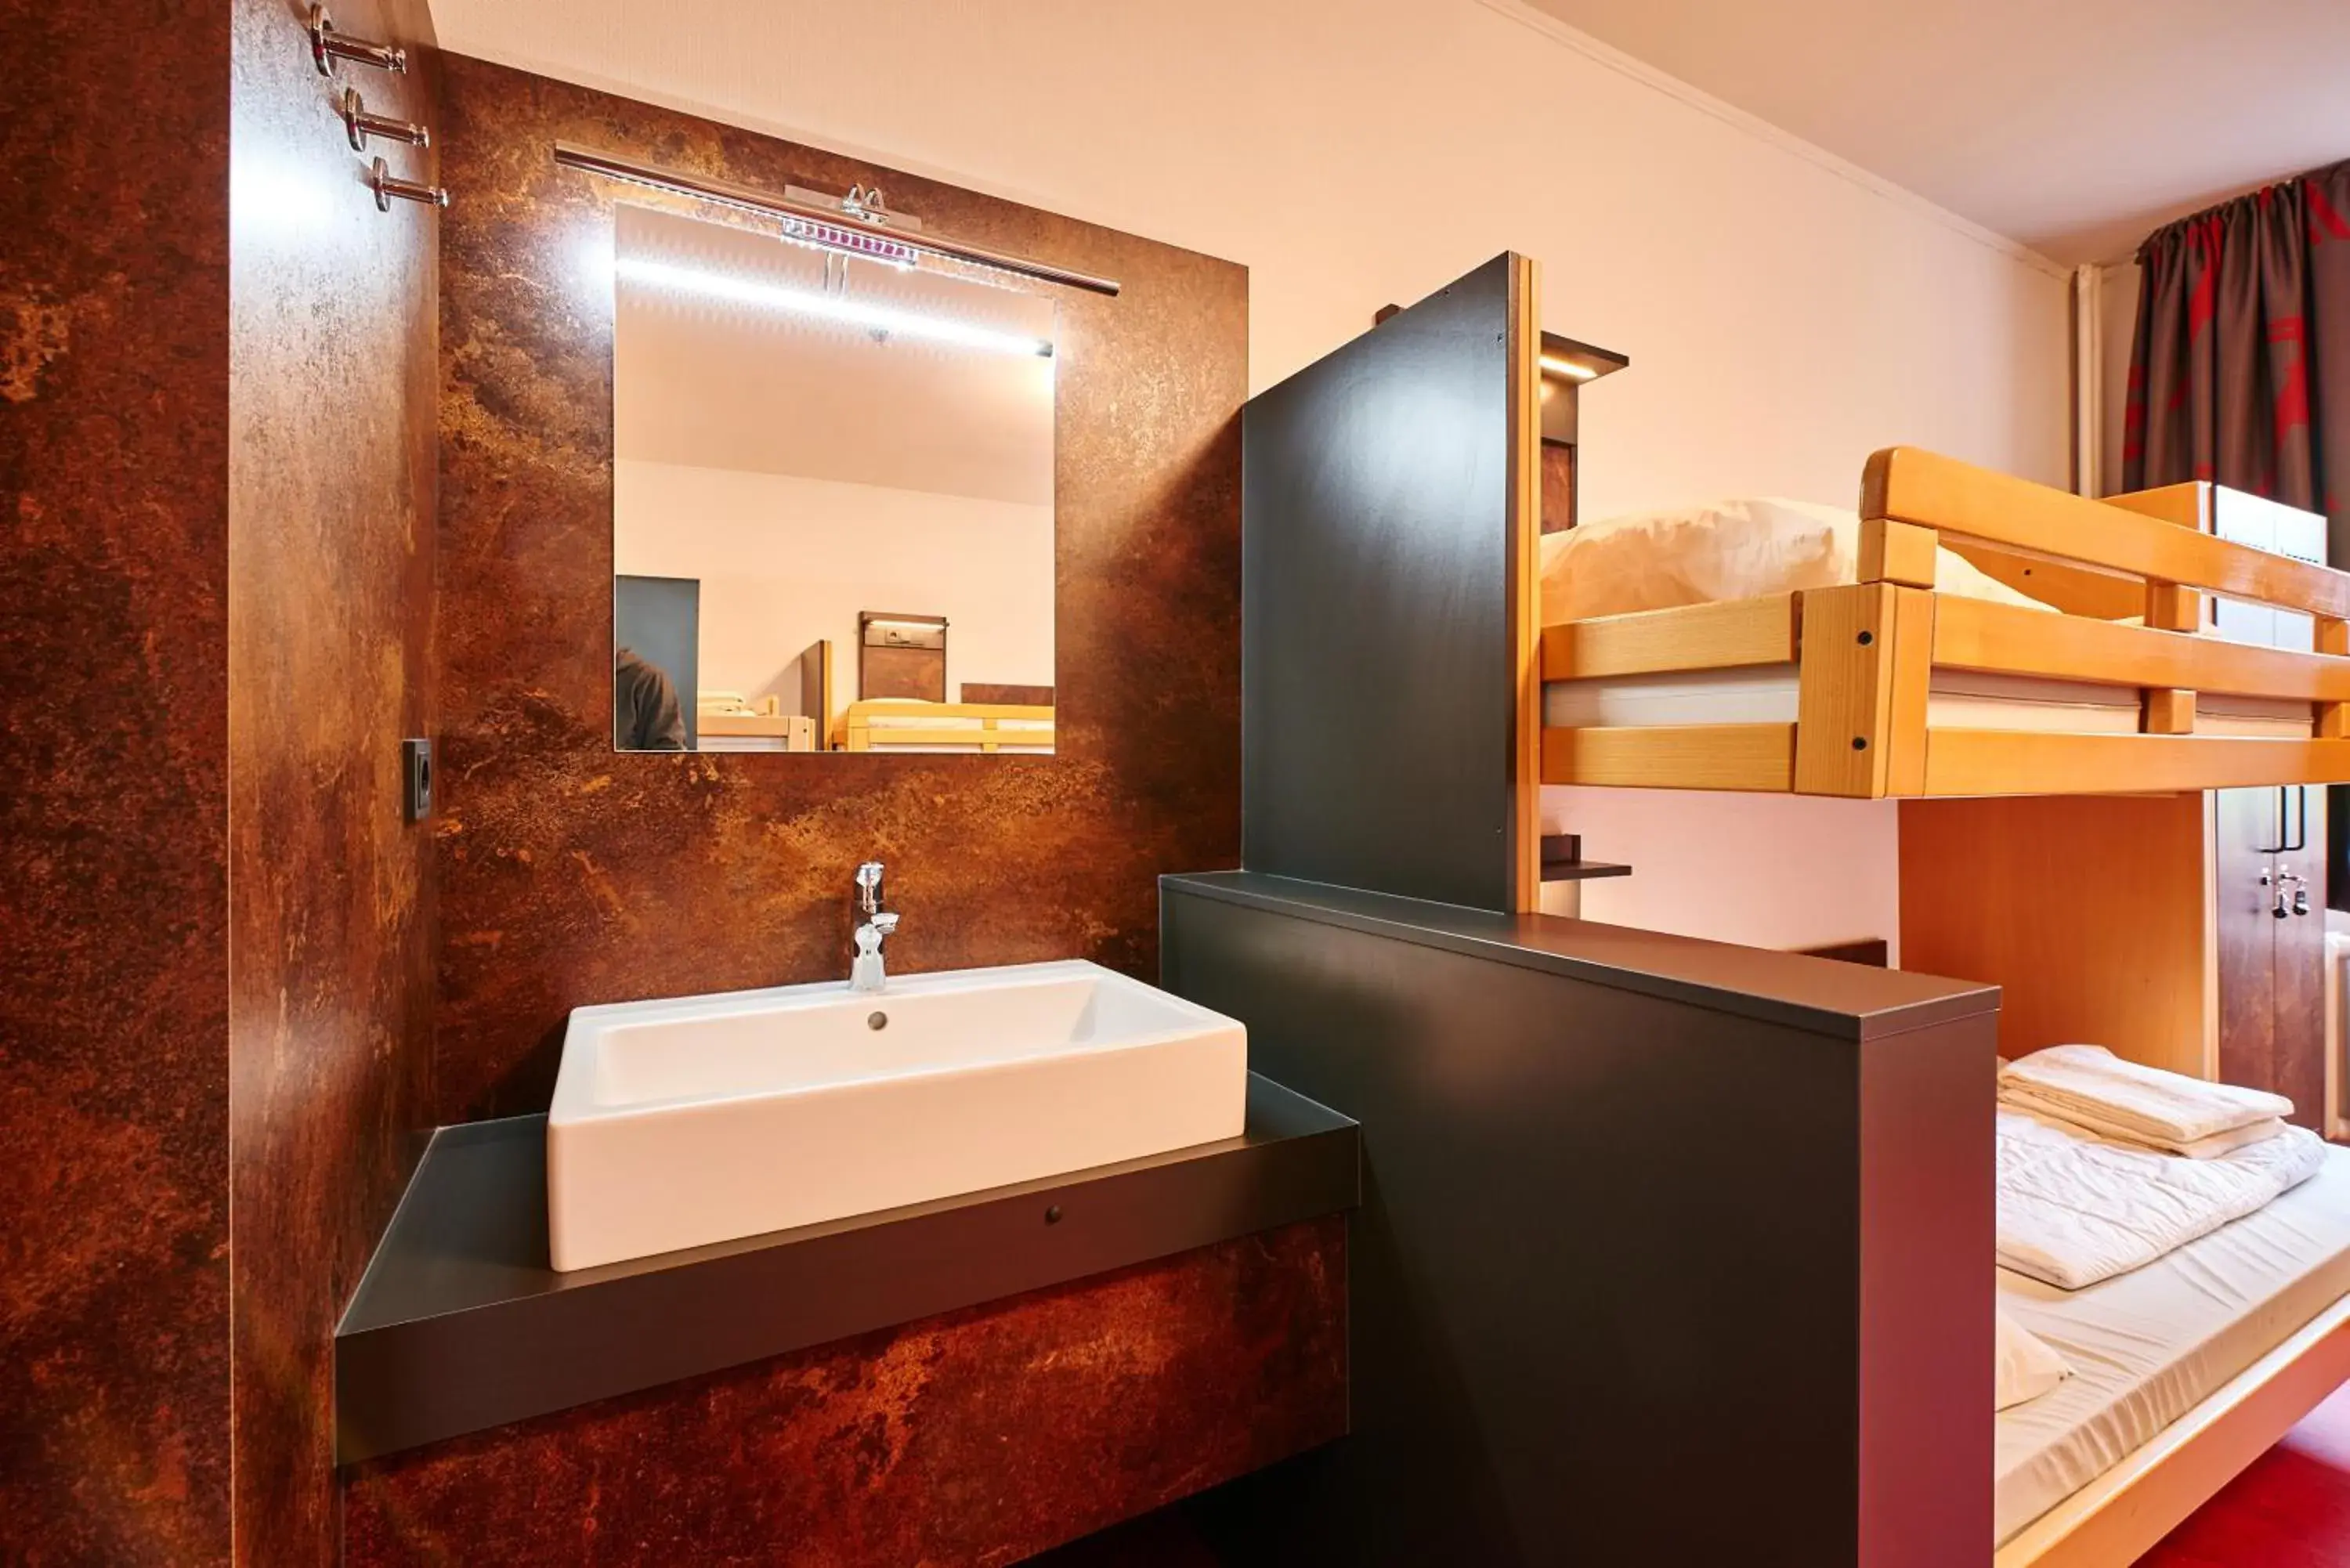 Photo of the whole room, Bathroom in DJH Jugendgastehaus Adolph Kolping